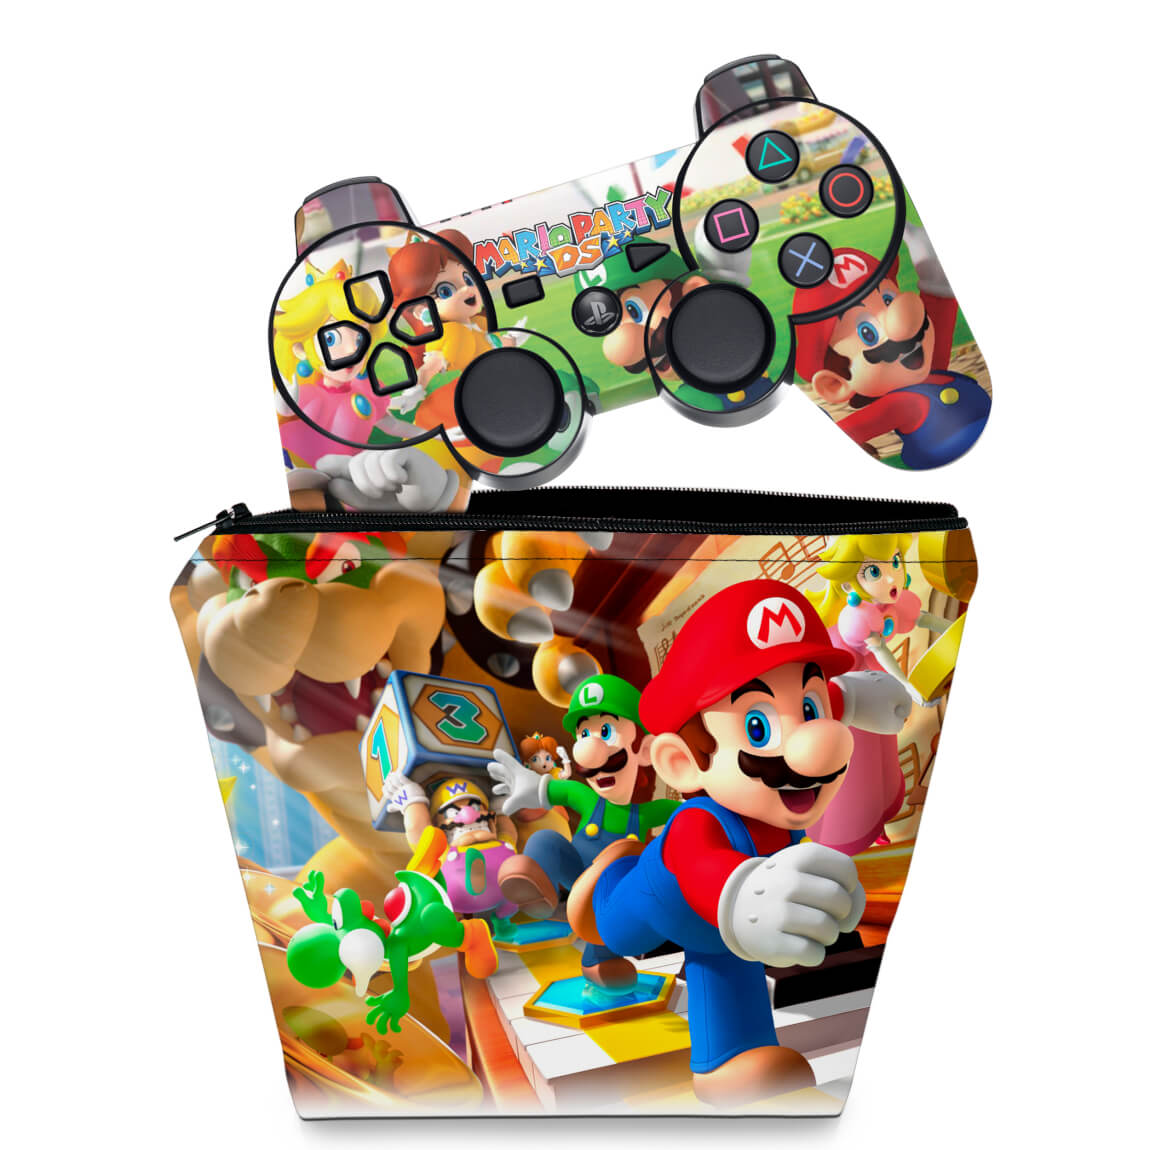 Capa Case e Skin Compatível PS4 Controle - Super Mario Bros - Pop